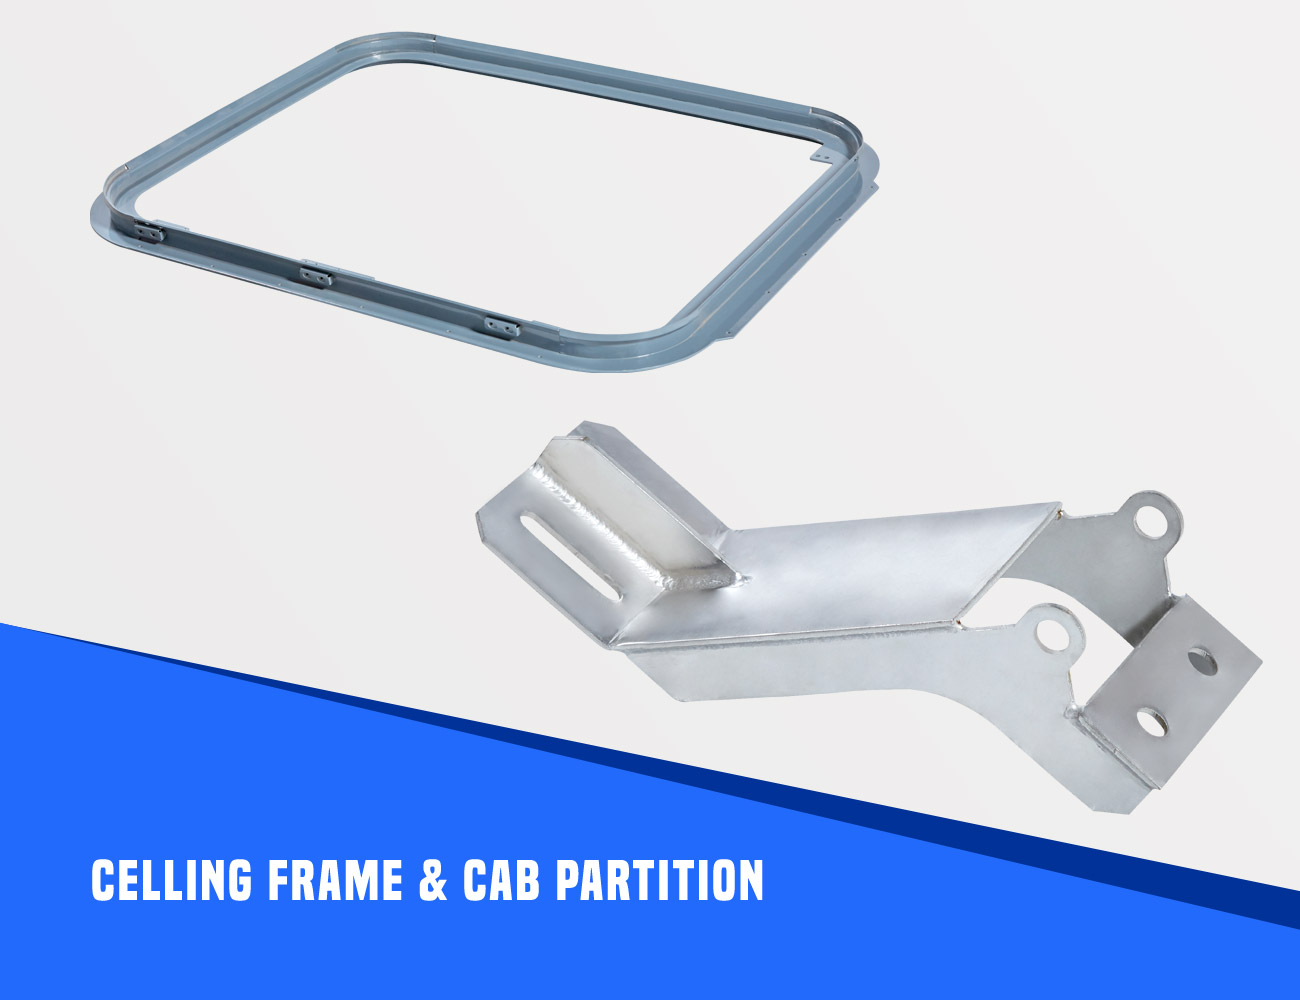 Celling-Frame-&-Cab-Partition